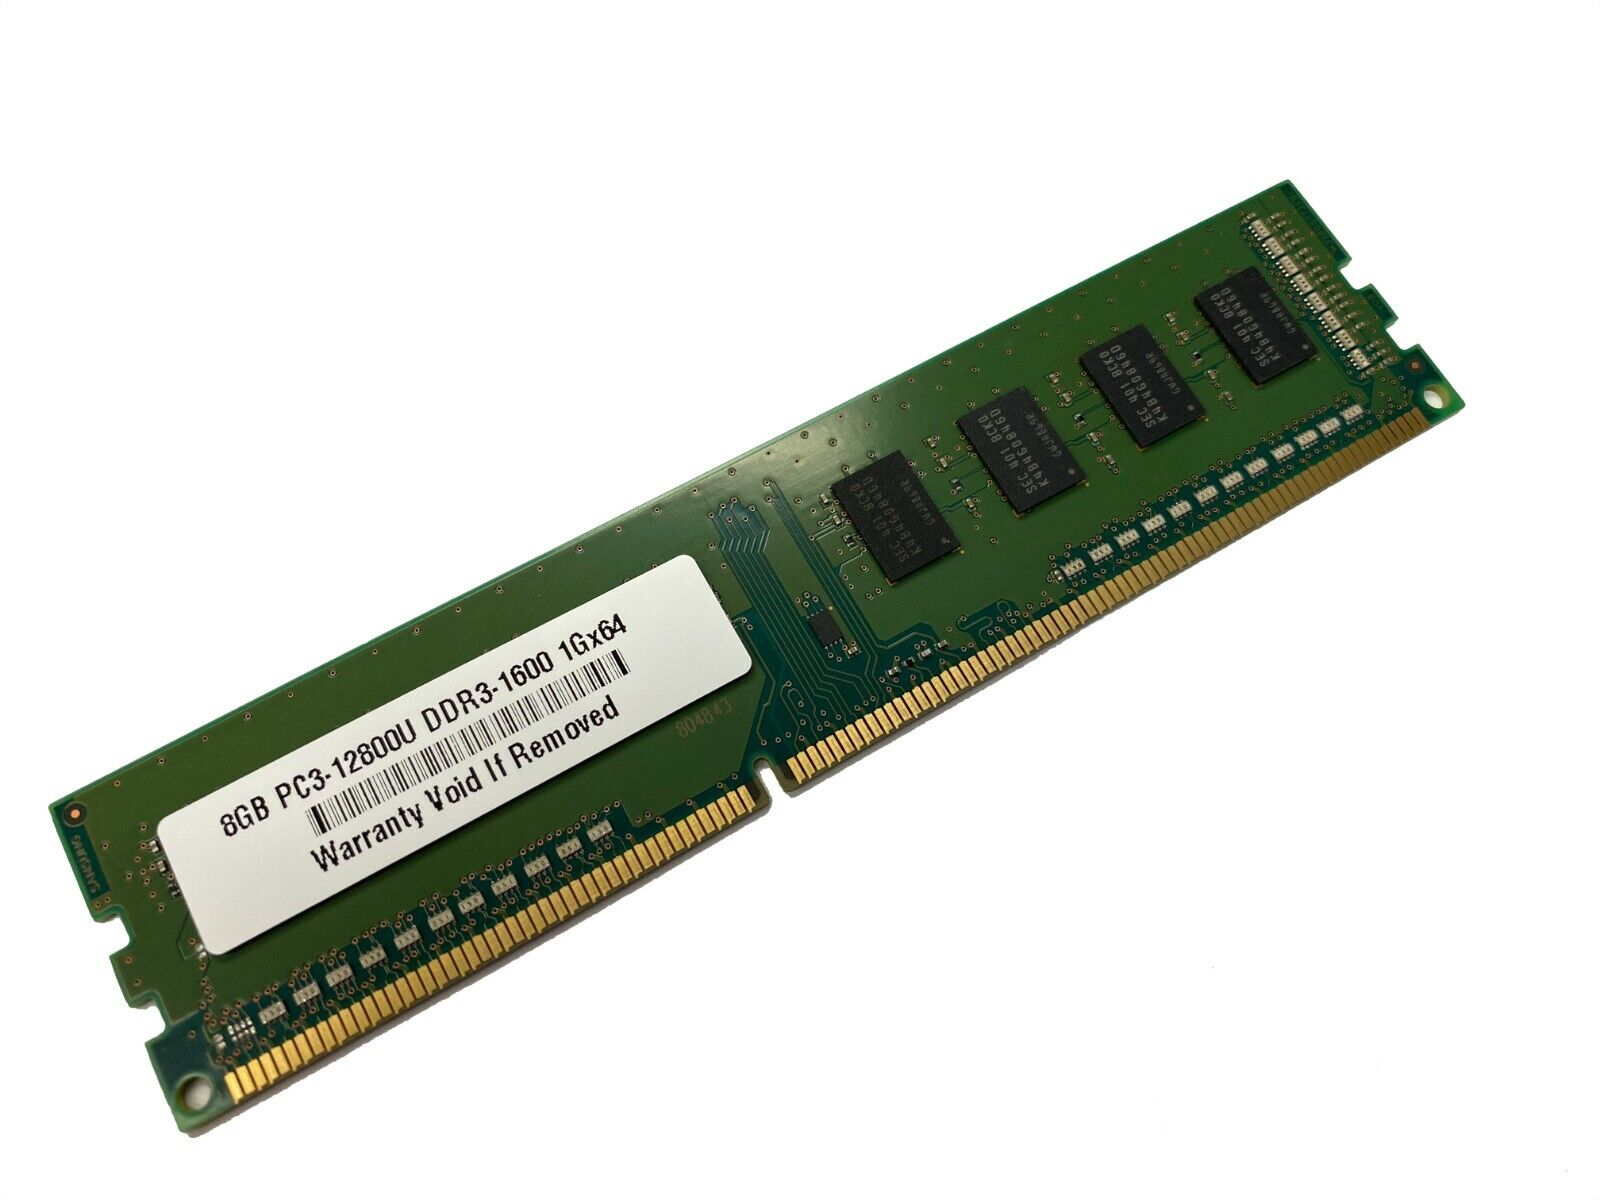 8GB Memory Gigabyte GA-P67-DS3-B3 GA-P67X-UD3-B3 GA-P67X-UD3R-B3 PC3-12800U RAM